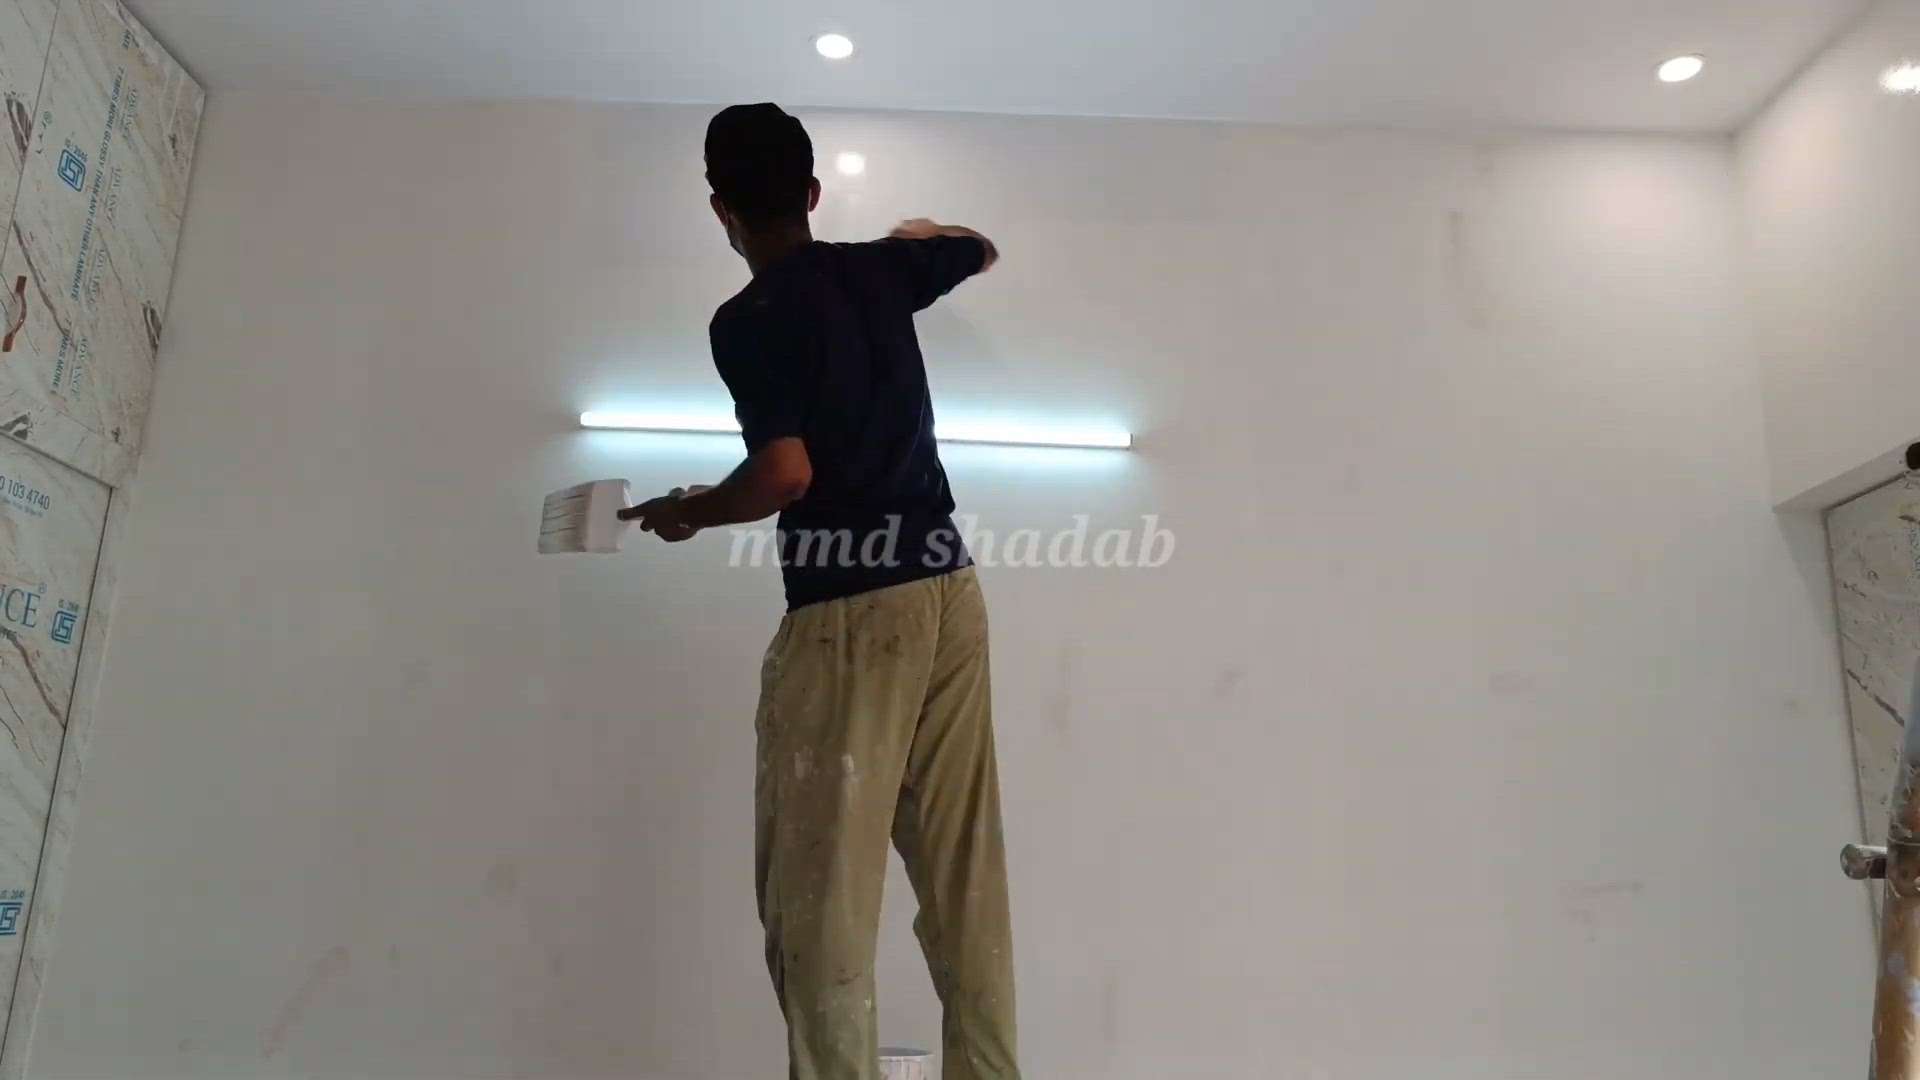 geumatric wall painting design ideas for bedroom & drawing room | #mmdshadab #koloapp #viral #viralvideo #WallDesigns